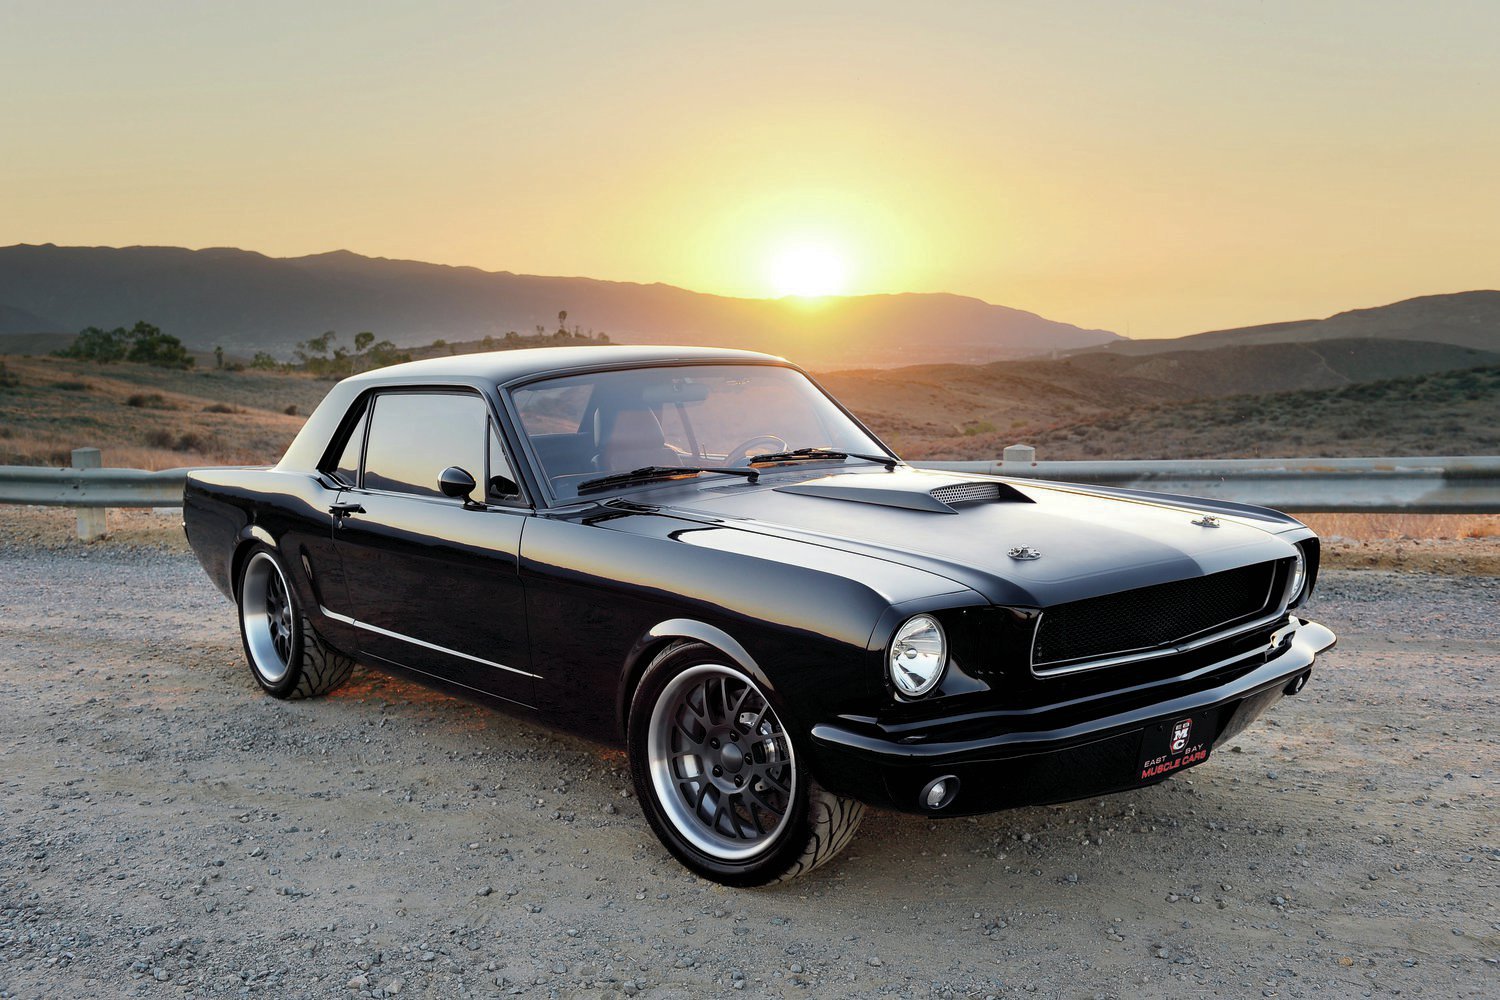 1964 Mustang Worth